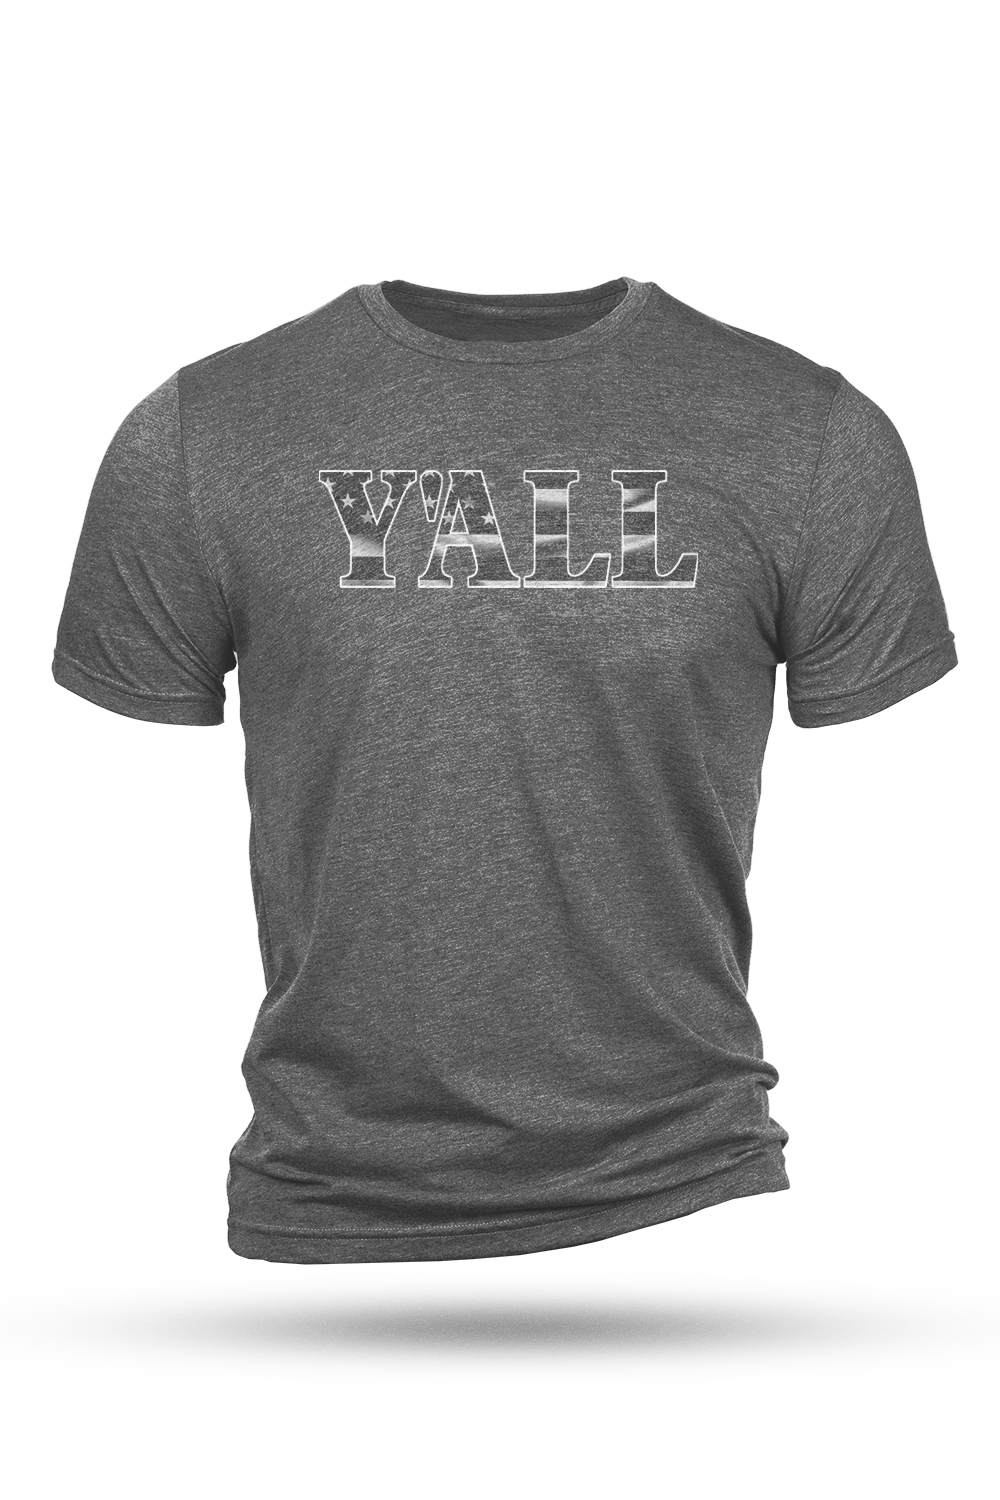 Men's Tri-Blend T-Shirt - Chad Prather - Y'all 2.0 - Nine Line Apparel